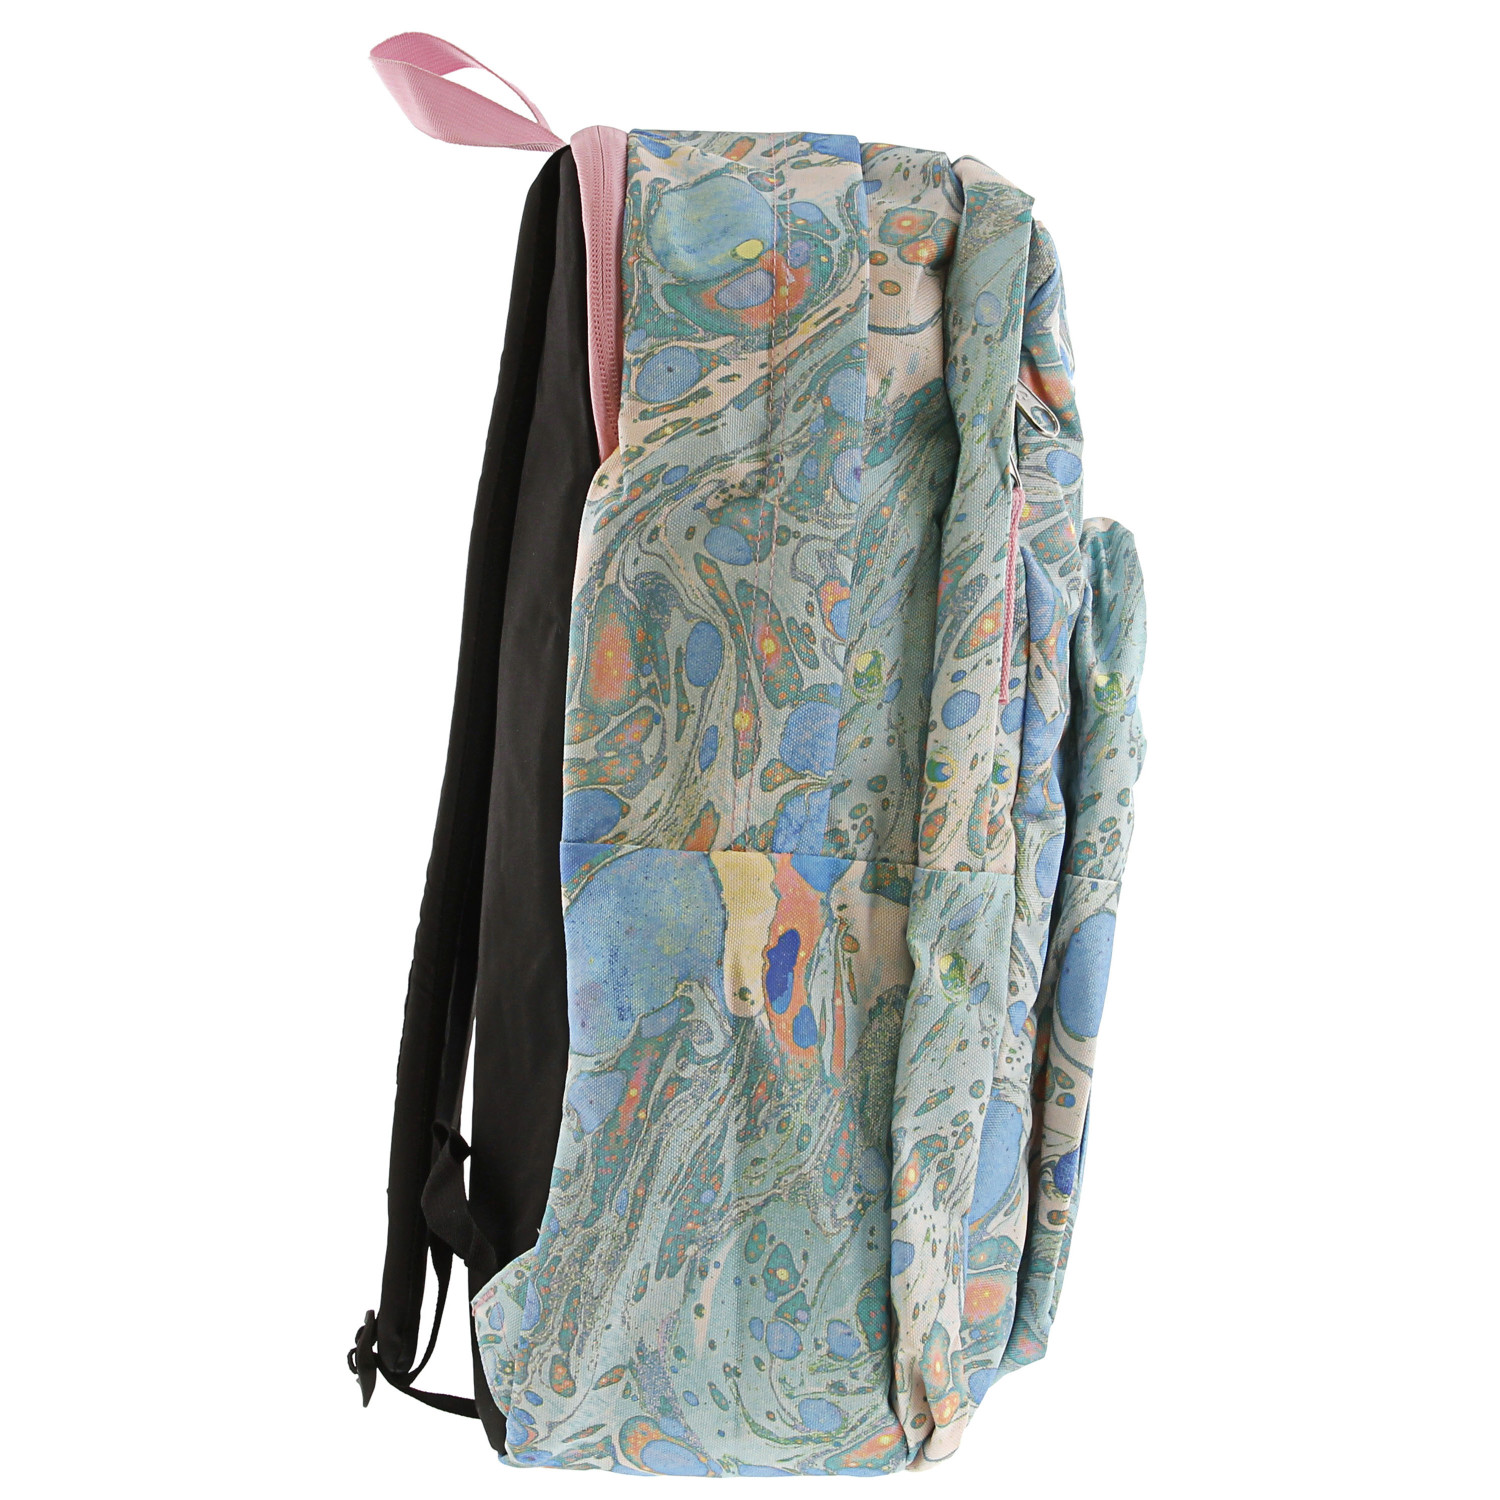 JanSport Big Student Polyester Backpack - Pastel Marble - image 2 of 3